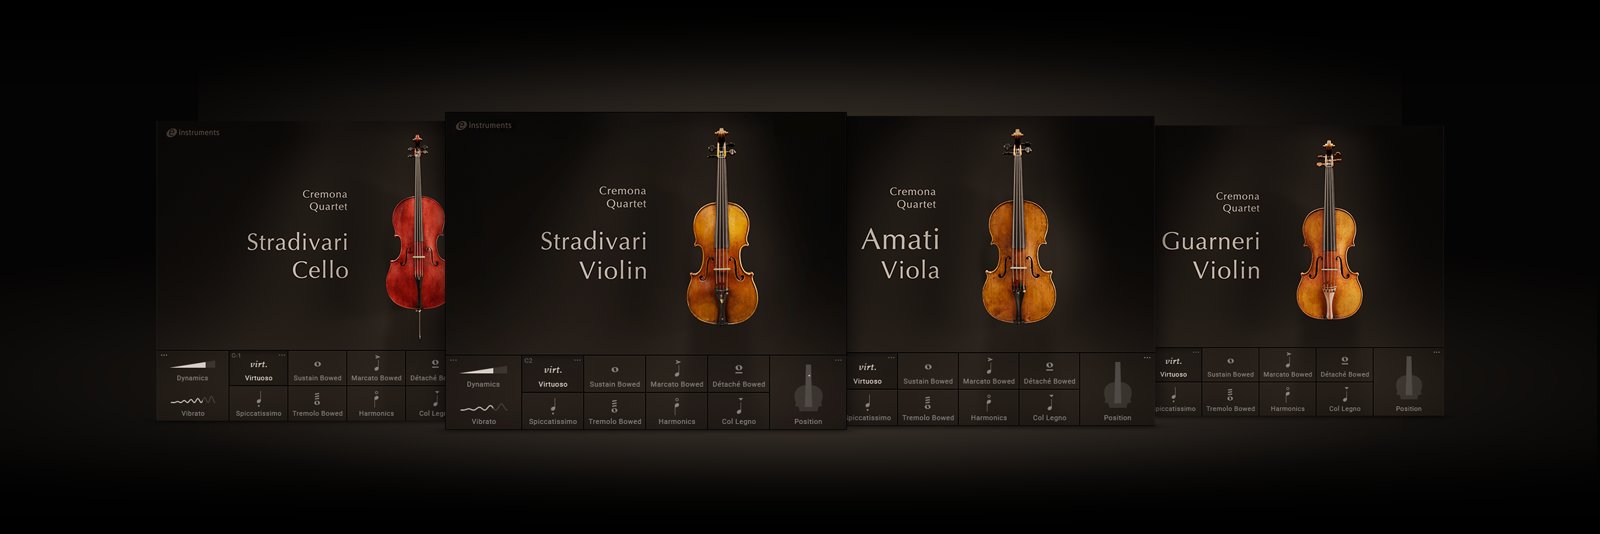 Violin kontakt. Native instruments - Cremona Quartet. Stradivari Violin Kontakt. Ni Cremona Quartet. Кремона Страдивари.